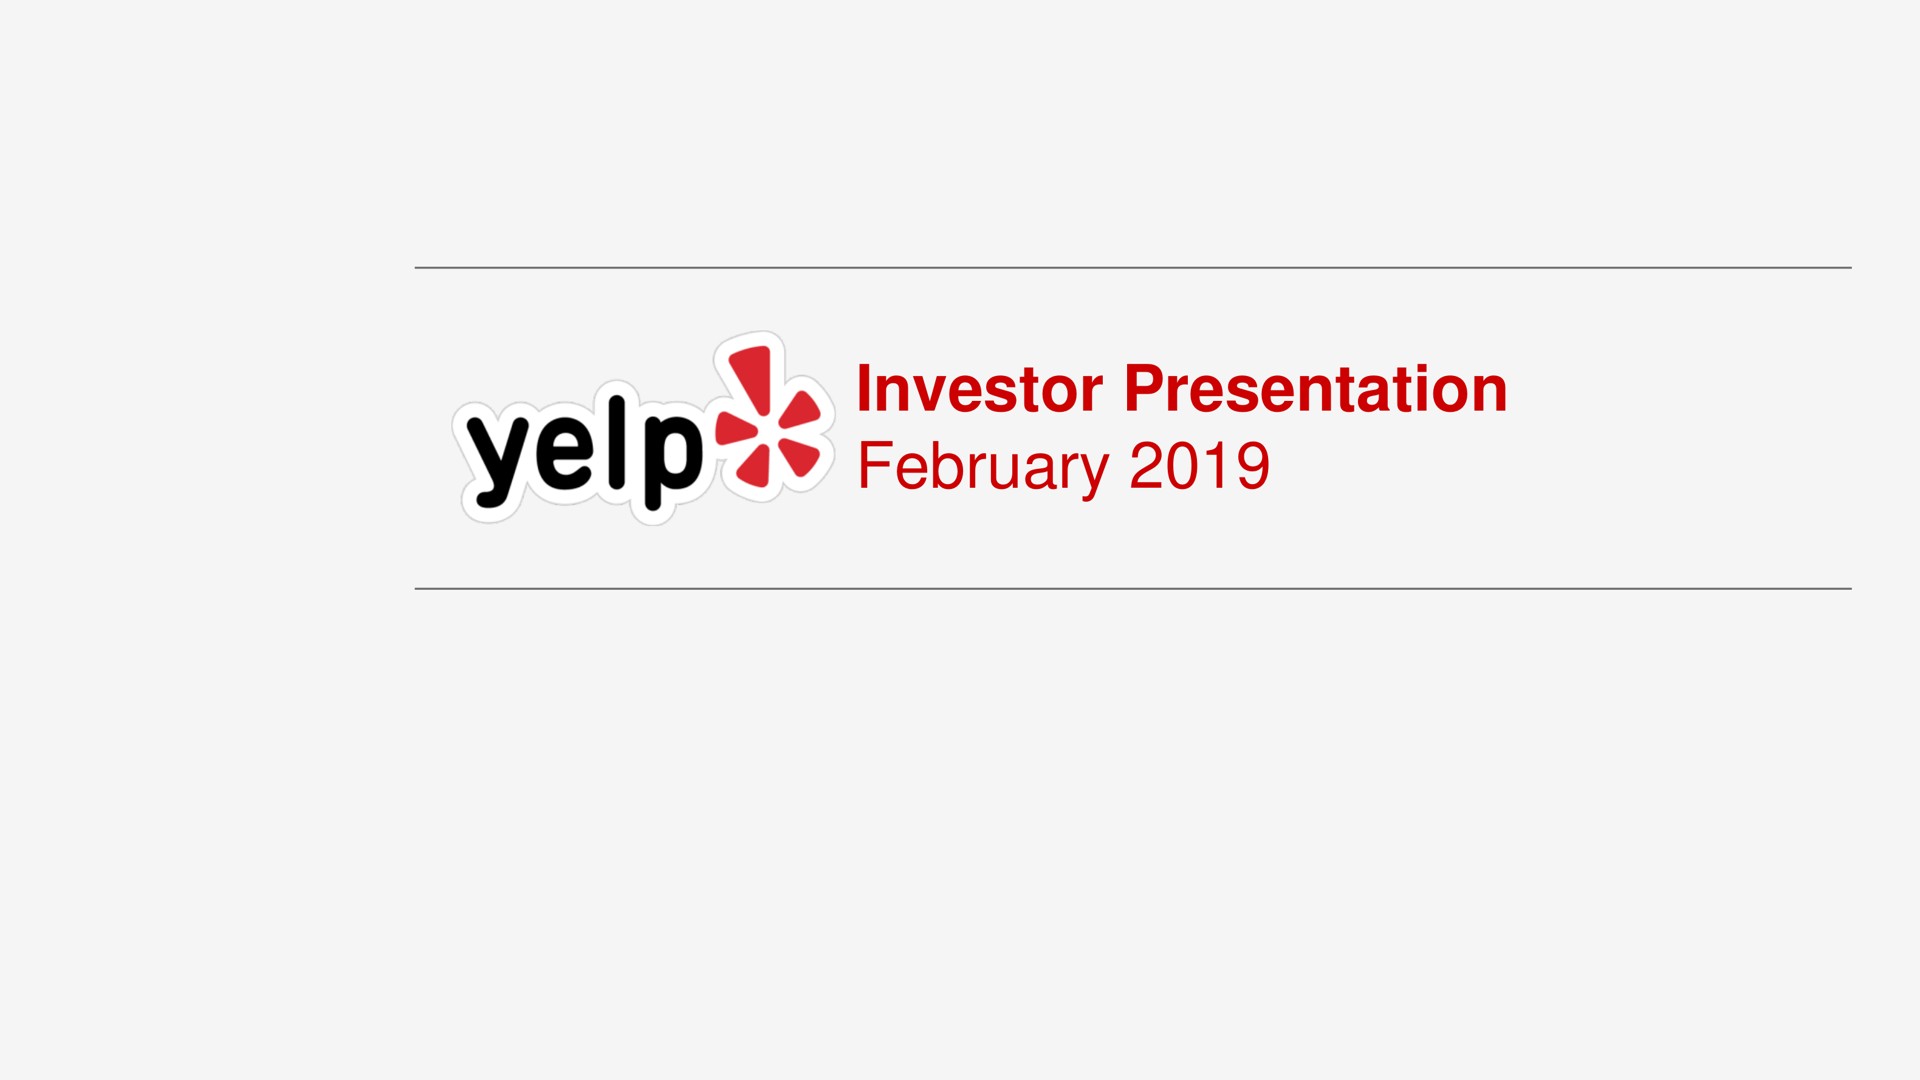 investor presentation yelp | Yelp